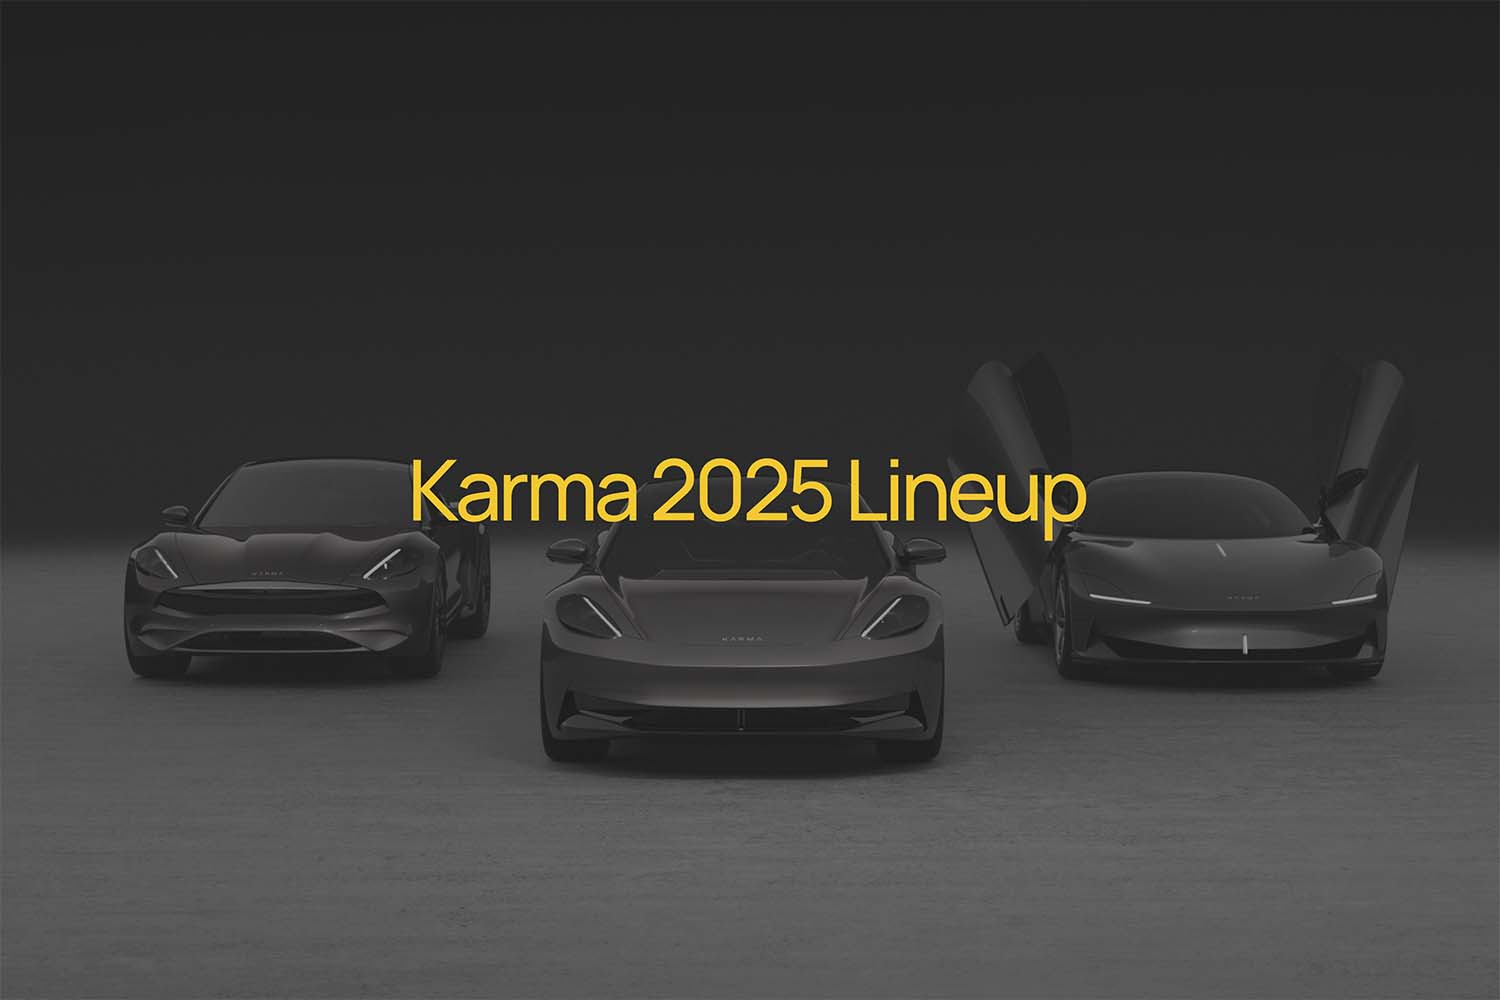 KARMA 2025 Lineup